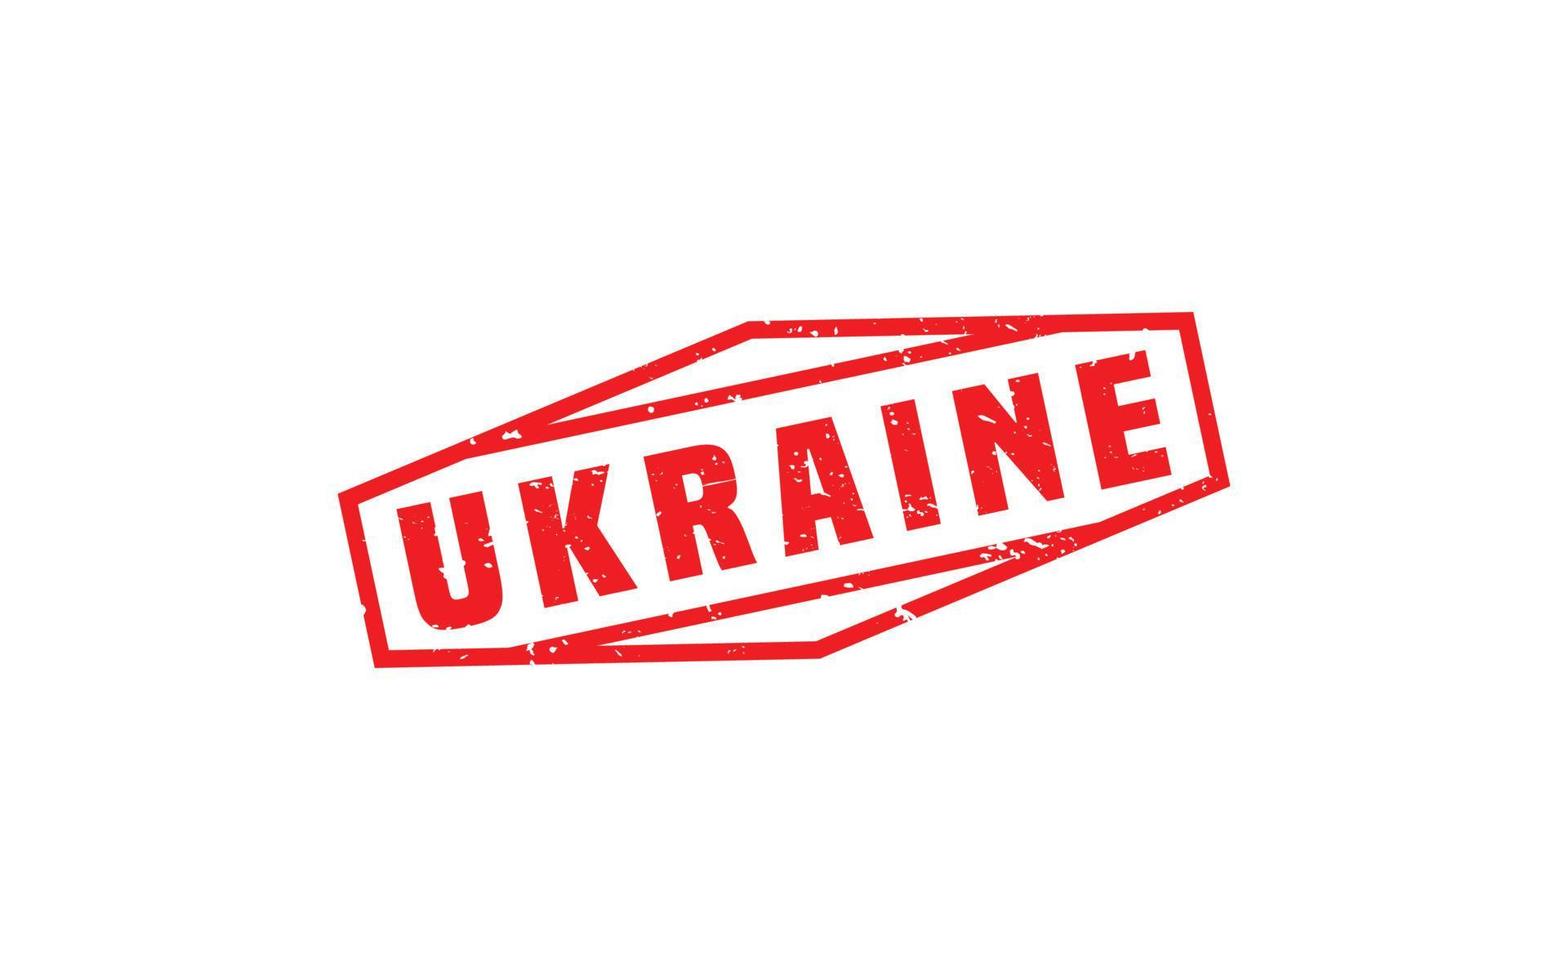 sello de goma de ucrania con estilo grunge sobre fondo blanco vector